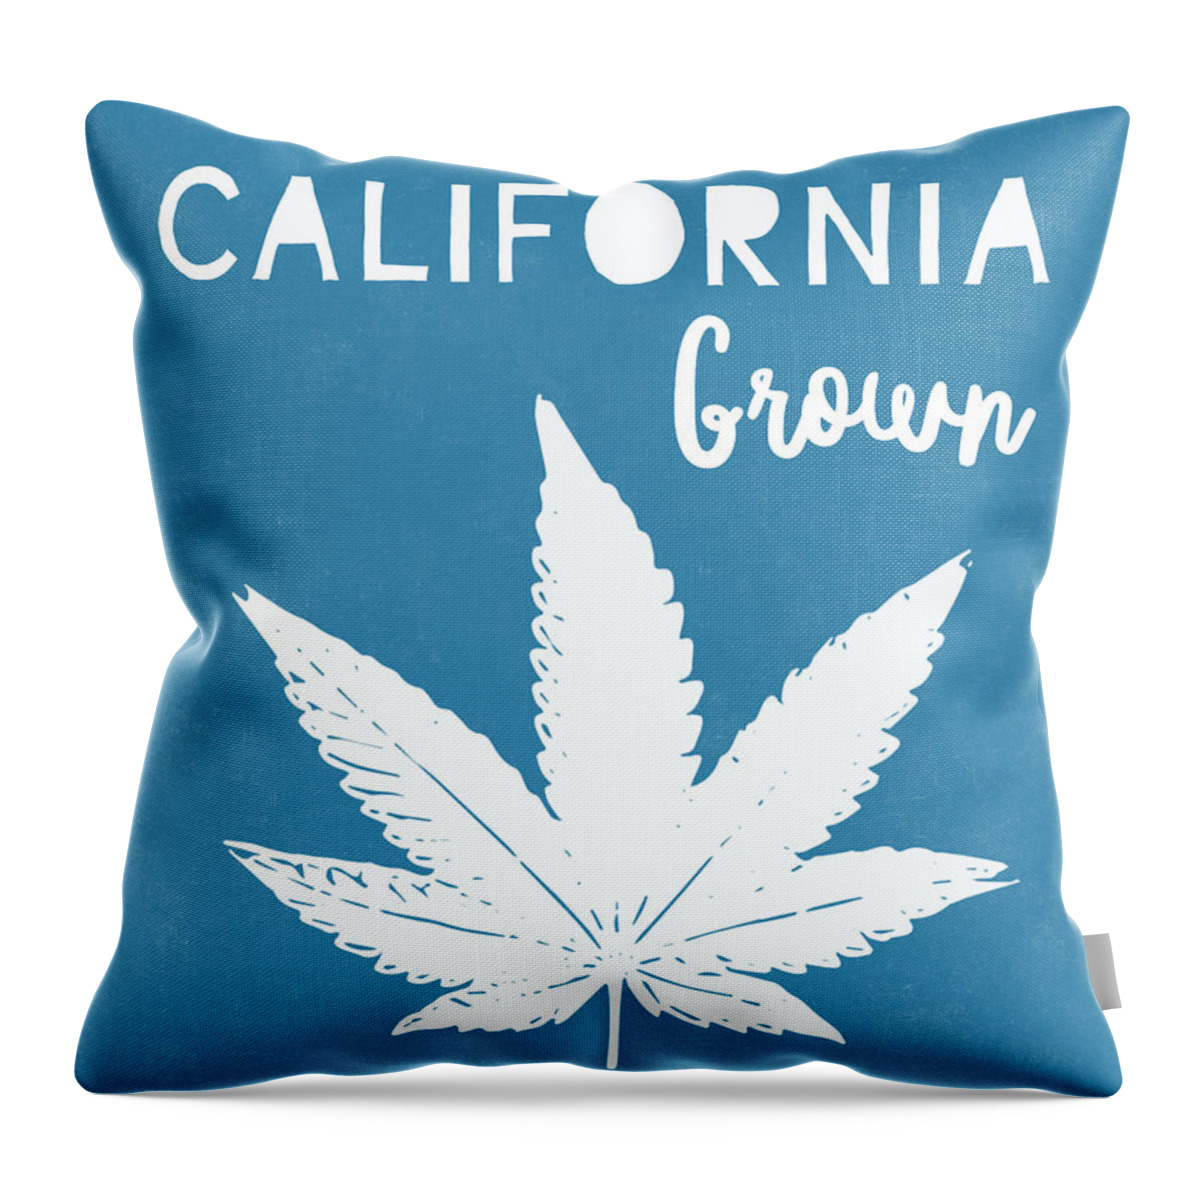 California Throw Pillow featuring the digital art California Grown Cannabis- Art by Linda Woods by Linda Woods